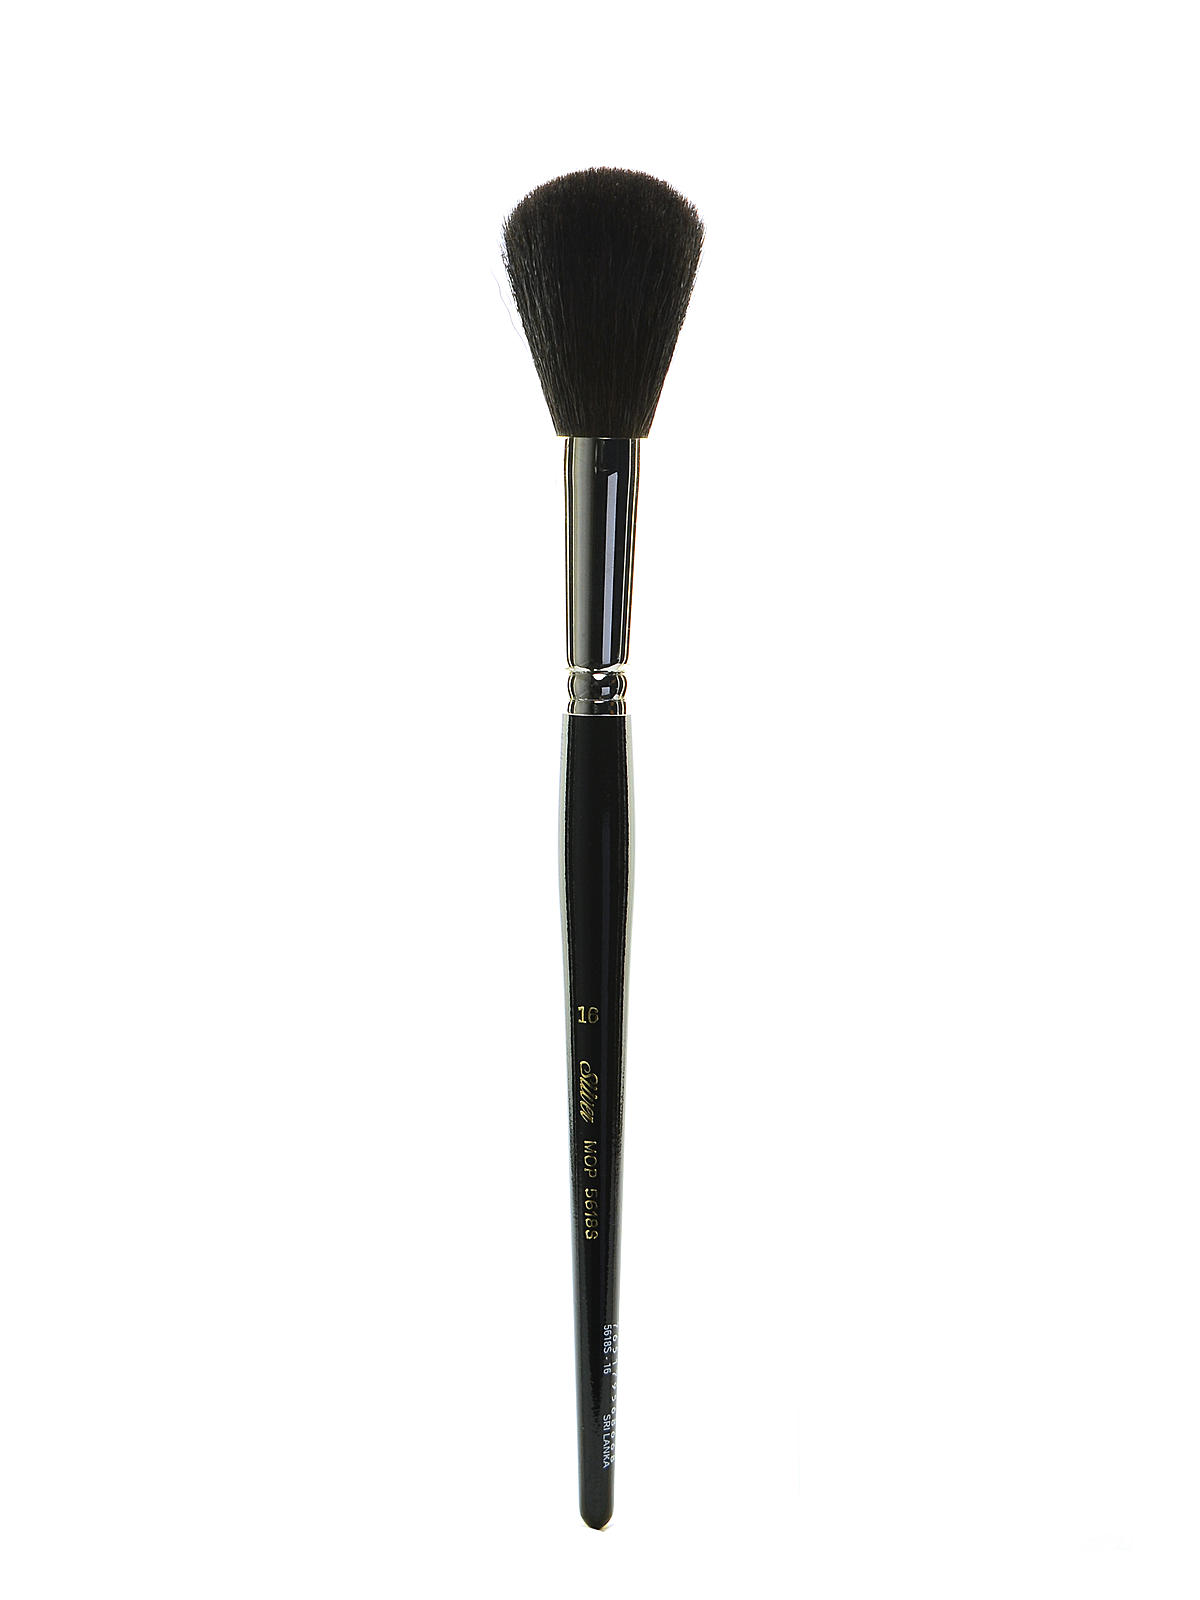 Black Round Oval Mop Brushes 16 Round Mop 5618